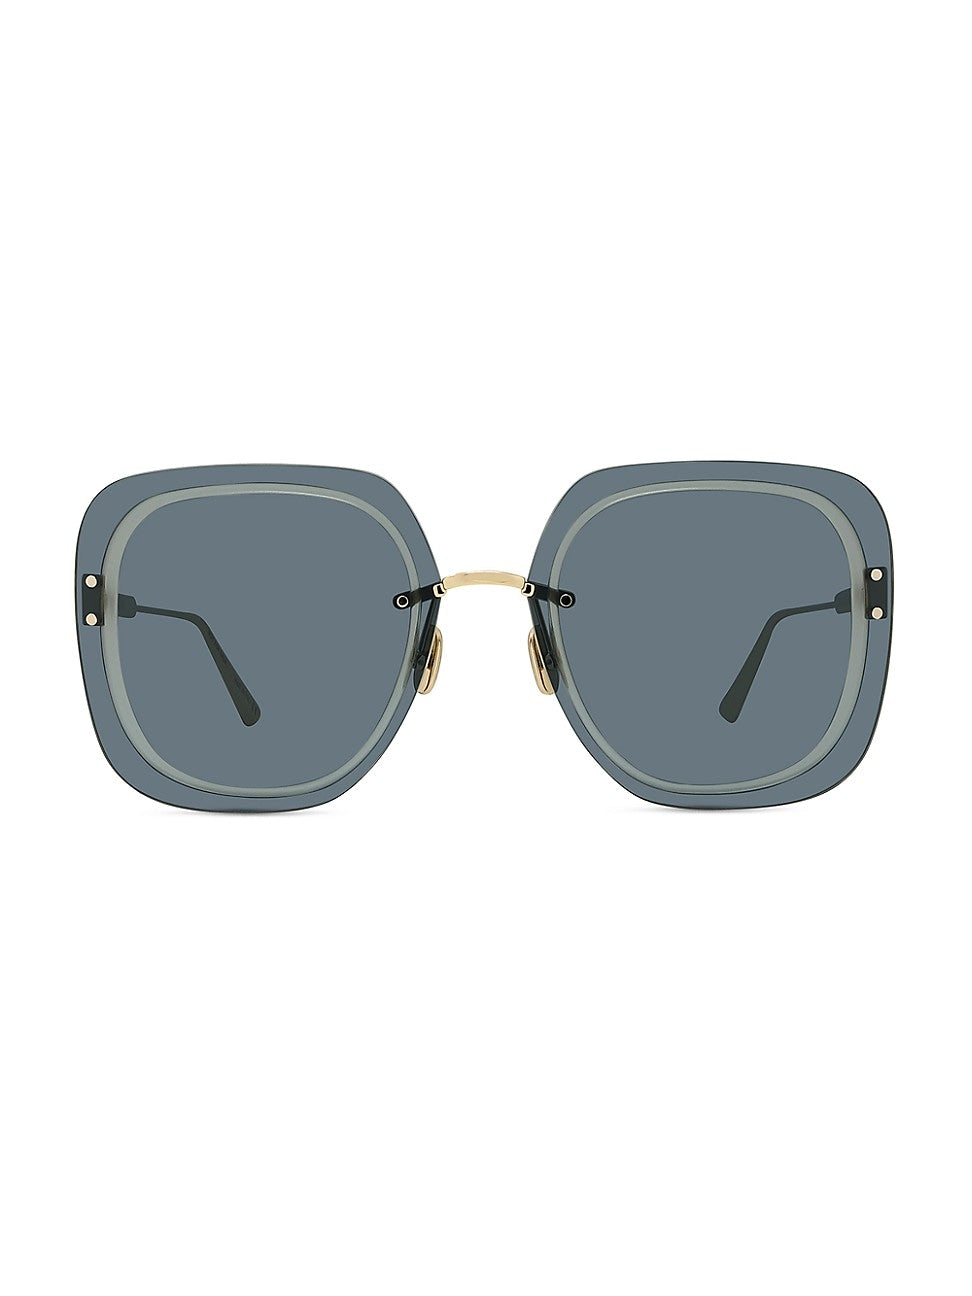 Christian Dior ULTRADIOR-SU-B0B0-65  New Sunglasses